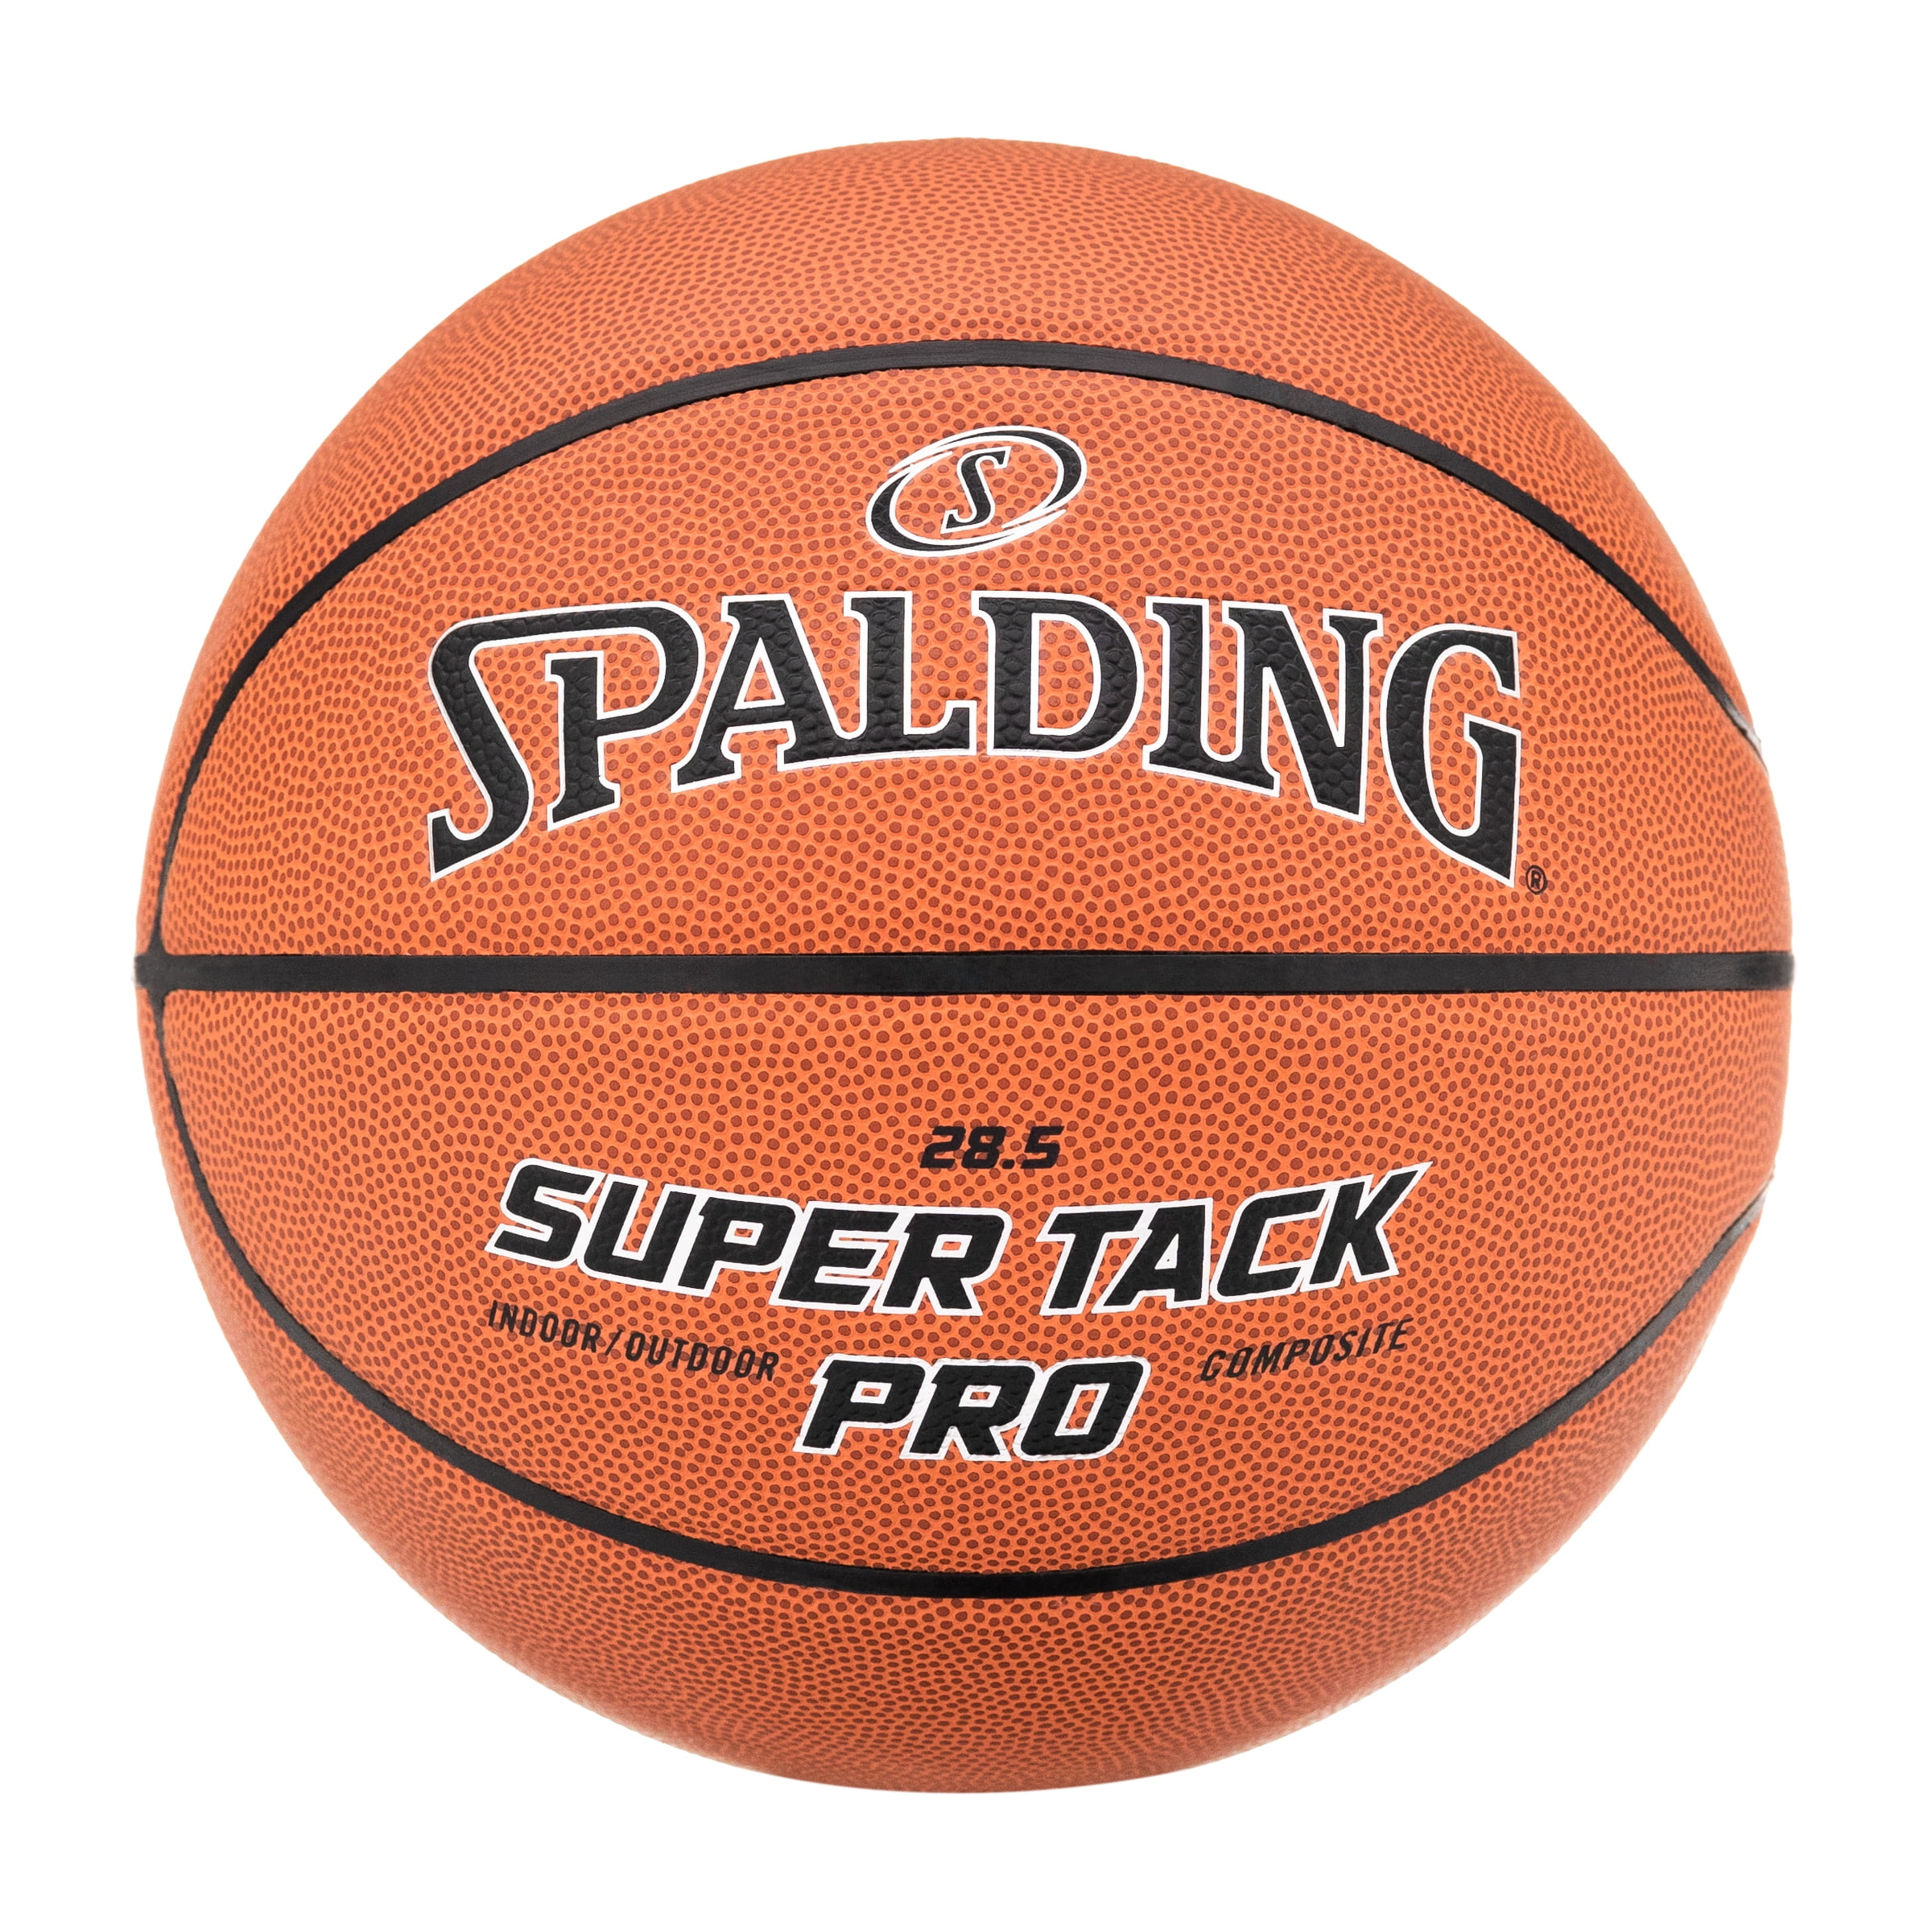 Spalding Super Tack Pro Indoor/Outdoor Basketball - 28.5 In